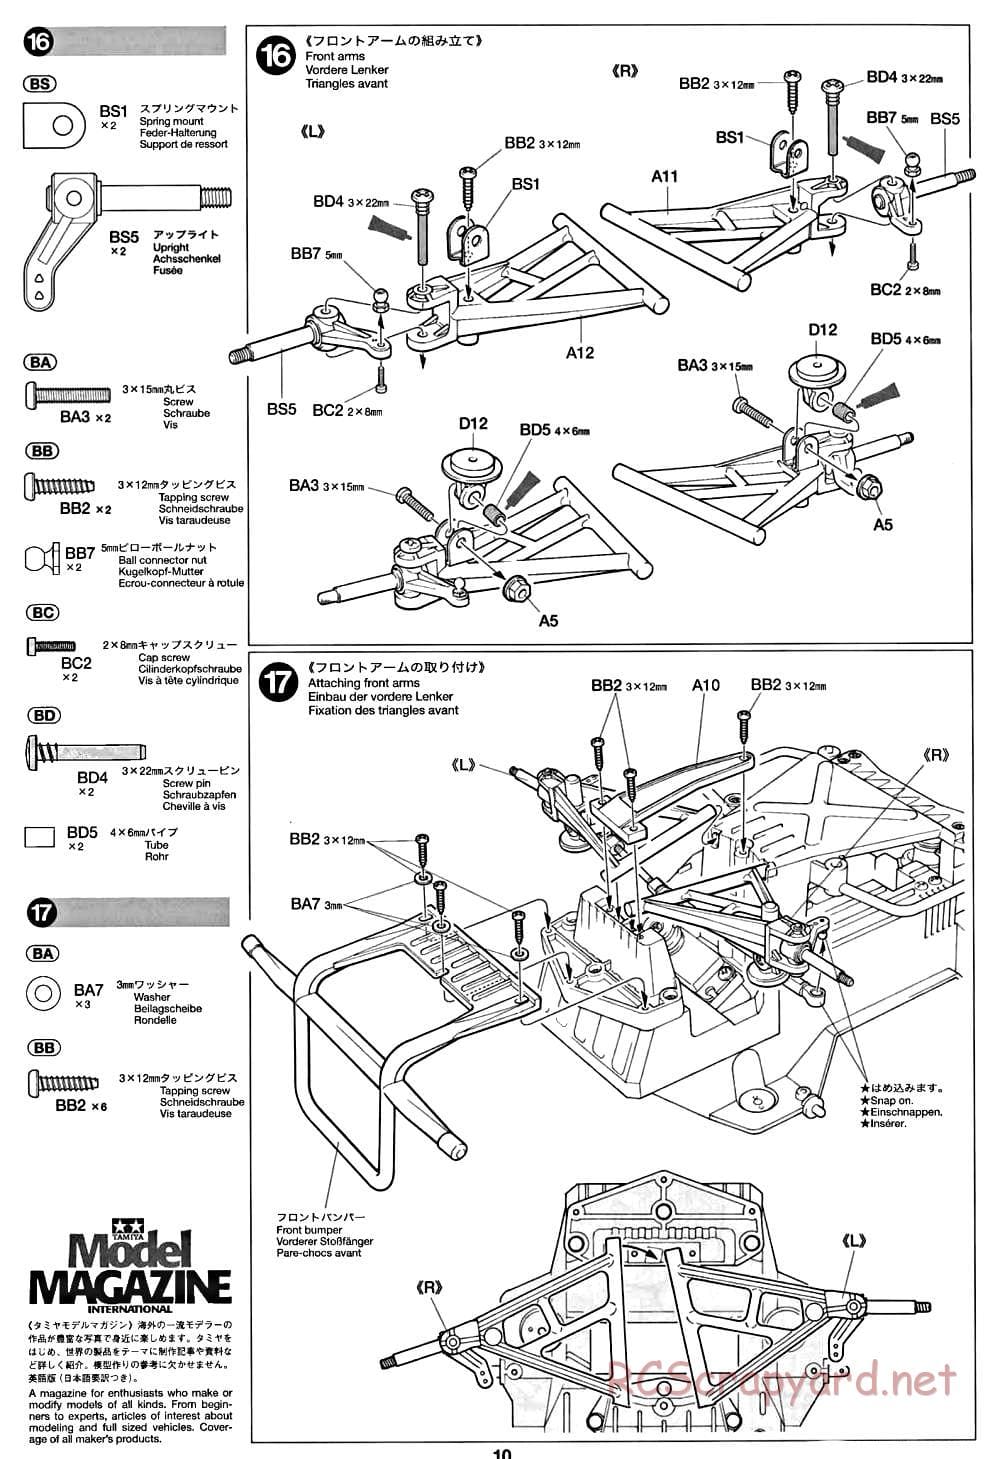 Tamiya - CW-01 Chassis - Manual - Page 10